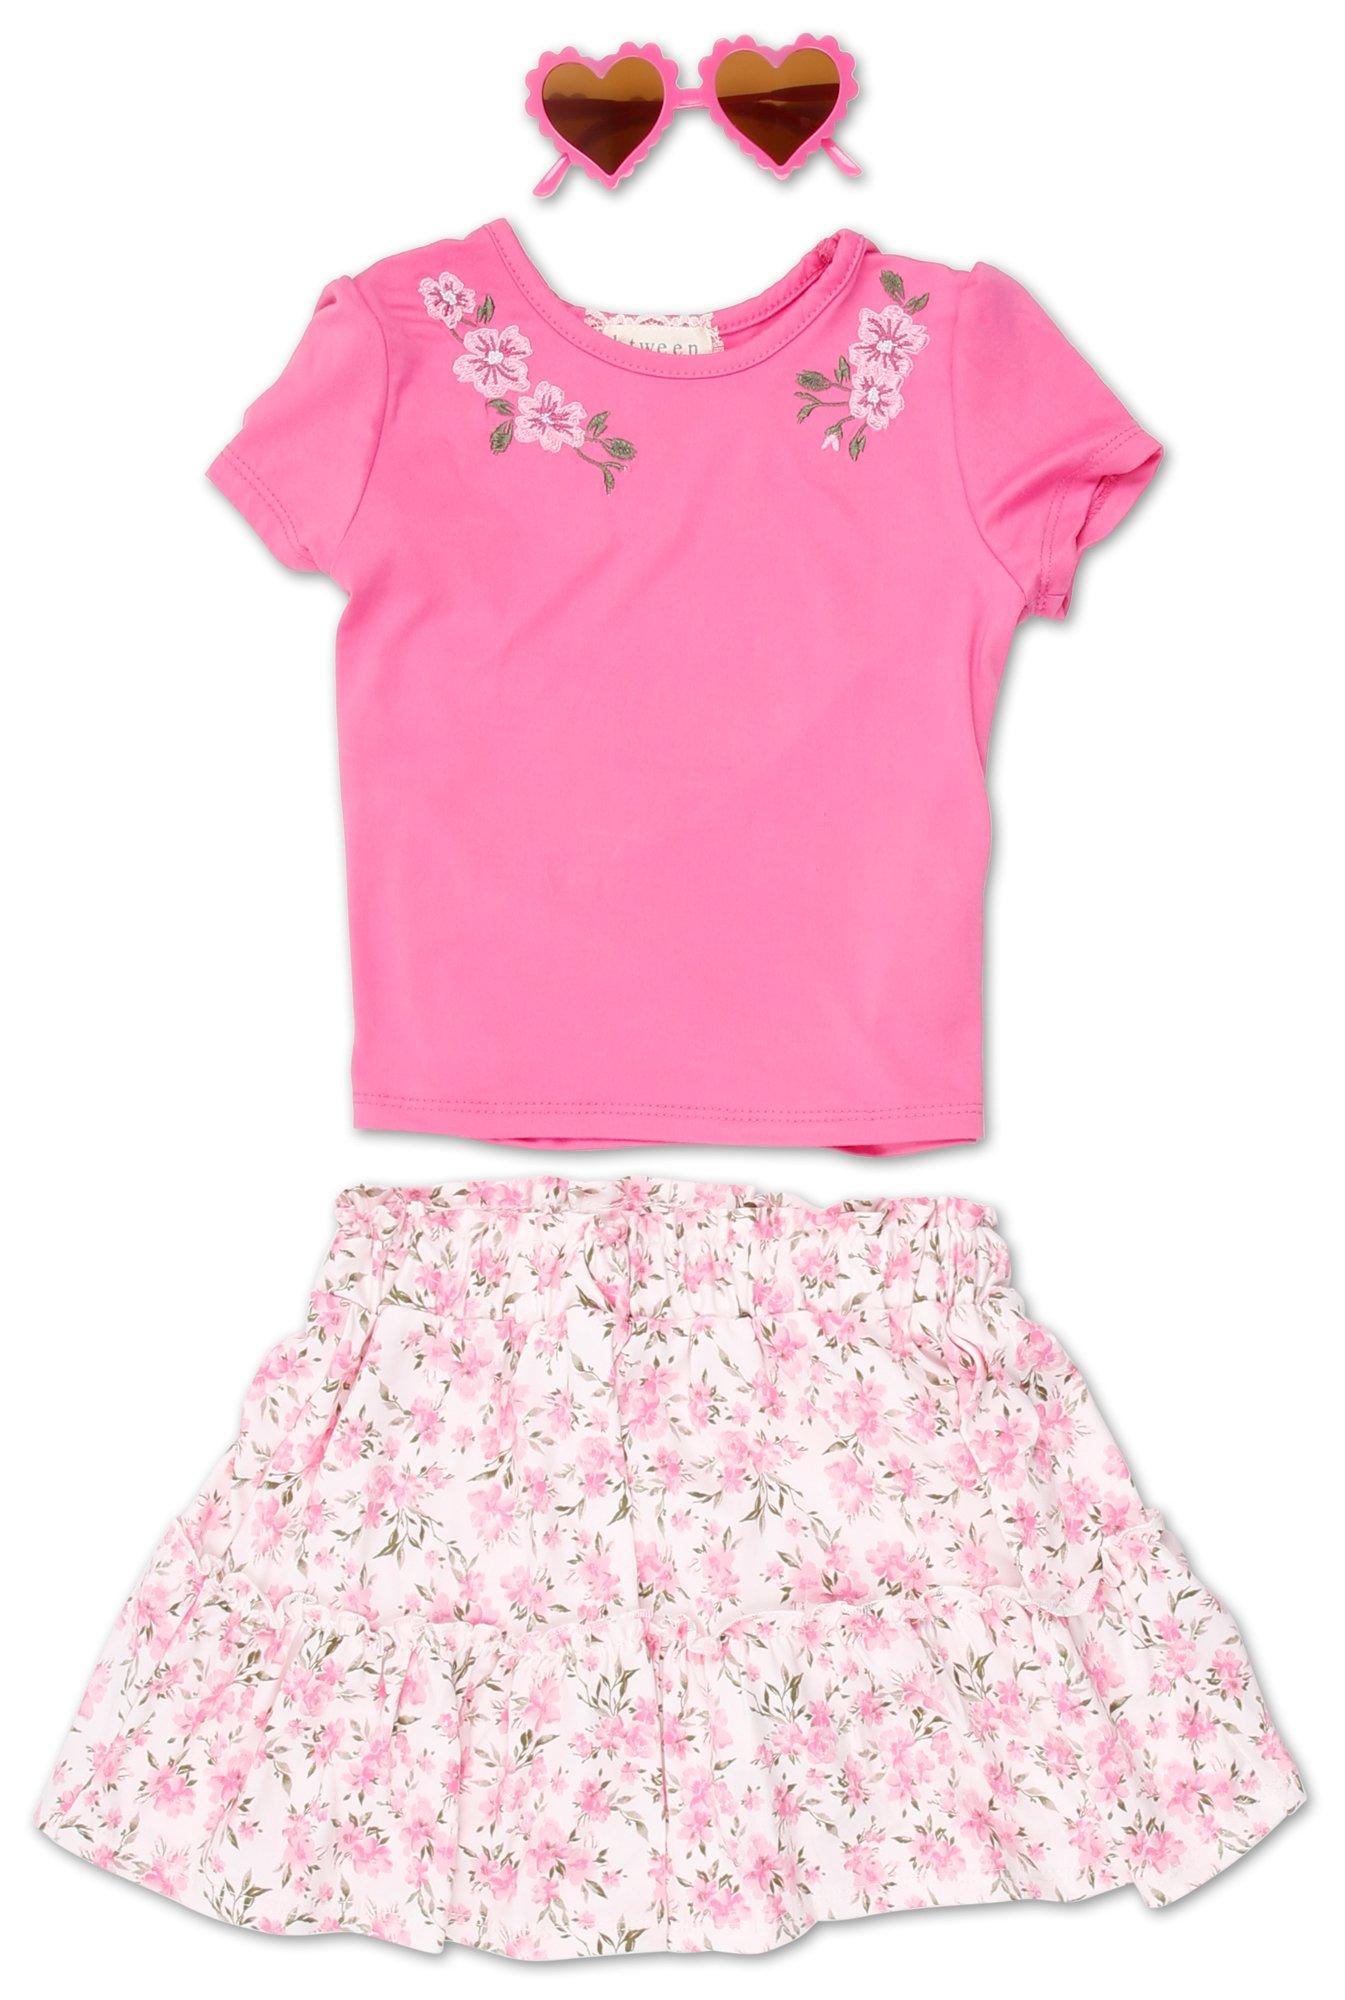 Toddler Girls 3 Pc Skirt Set